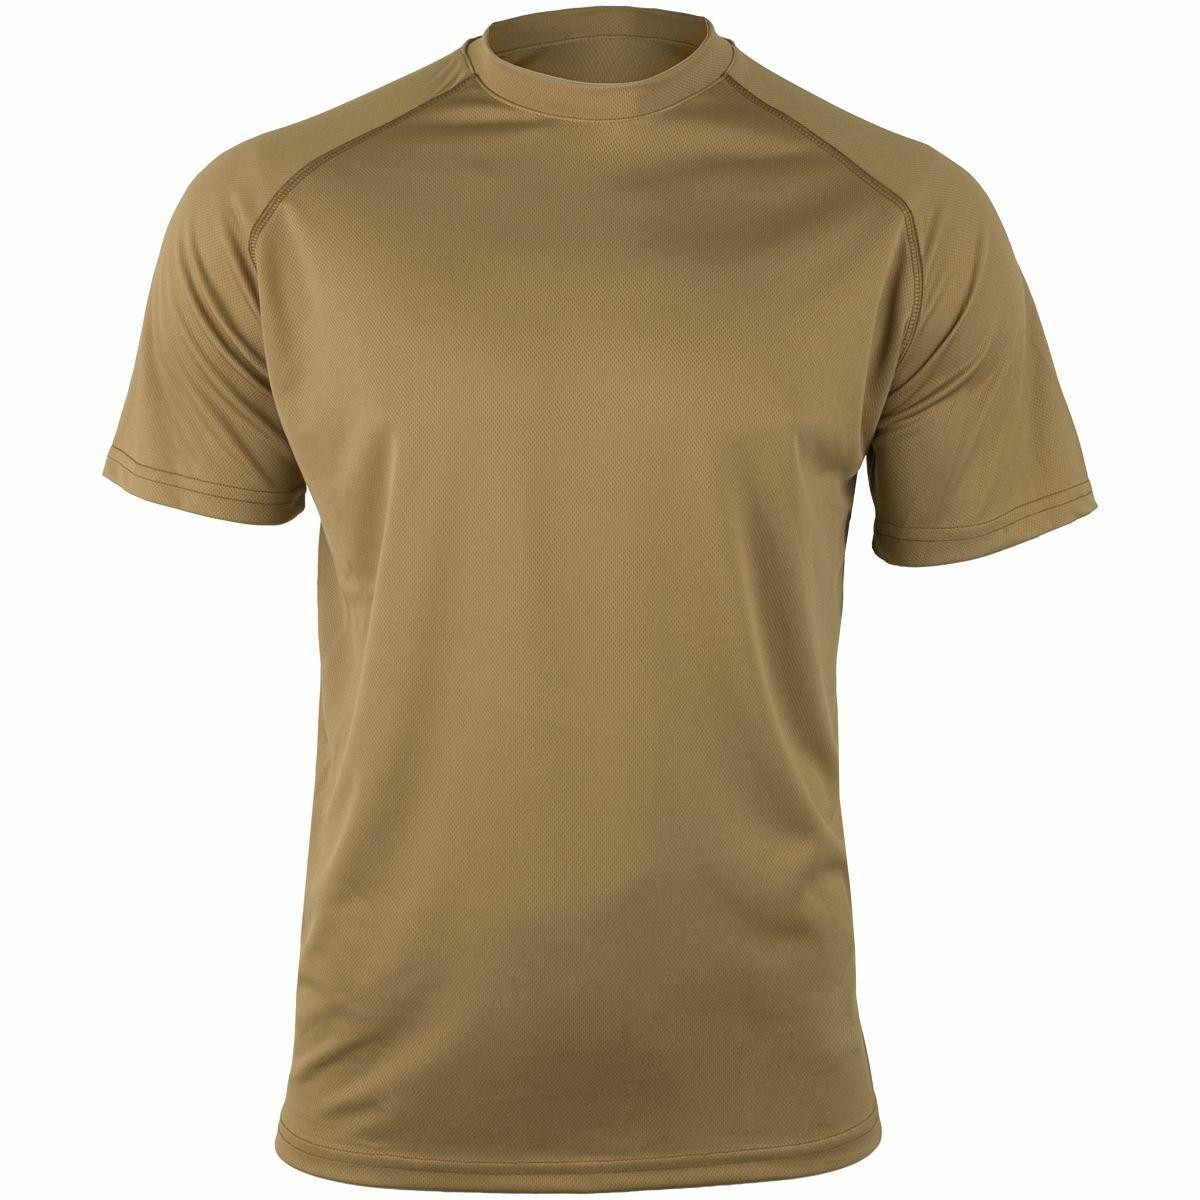 Viper Tactical Mesh Tech T-Shirt